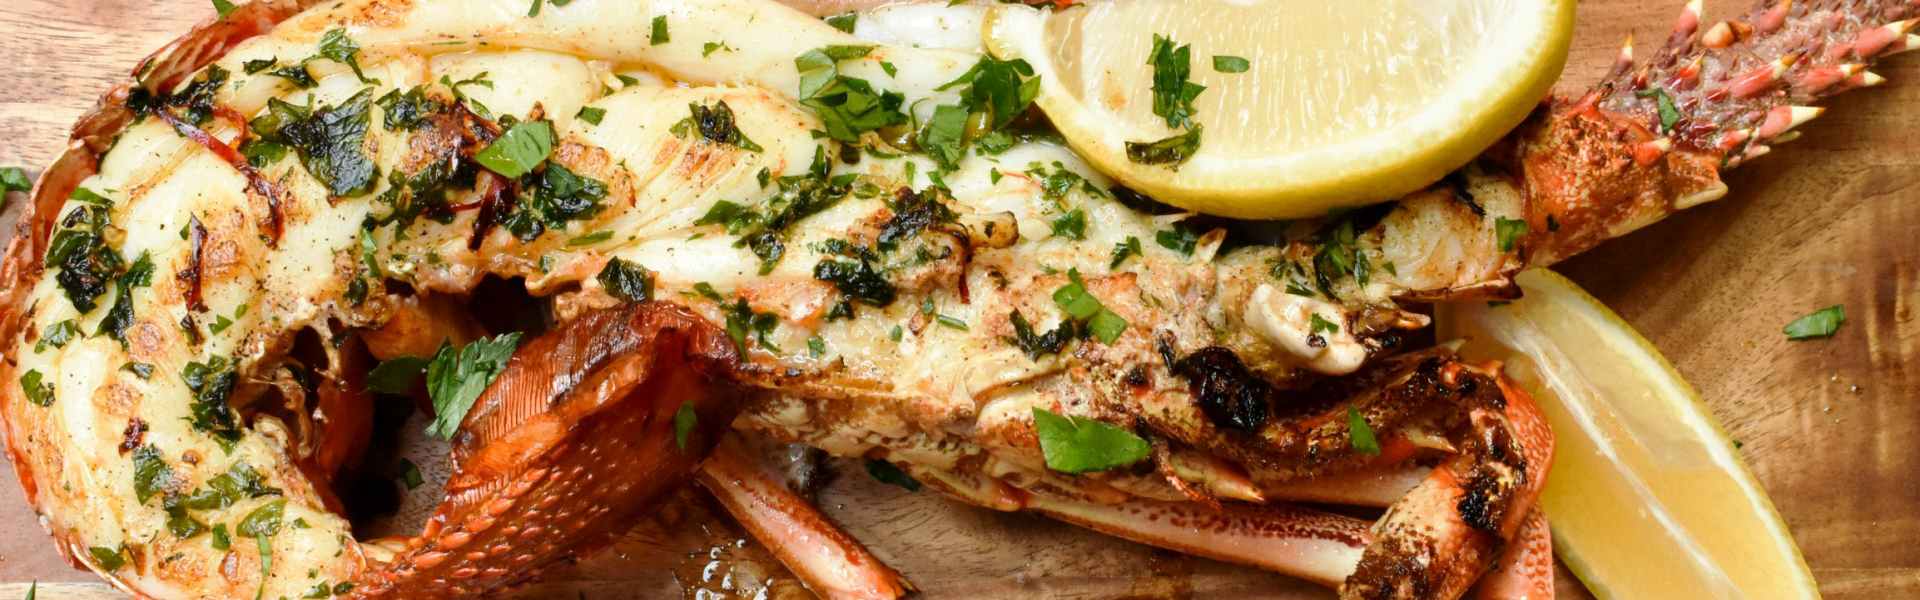 Buy lobster online Grilled Whole Norfolk Lobster Recipe